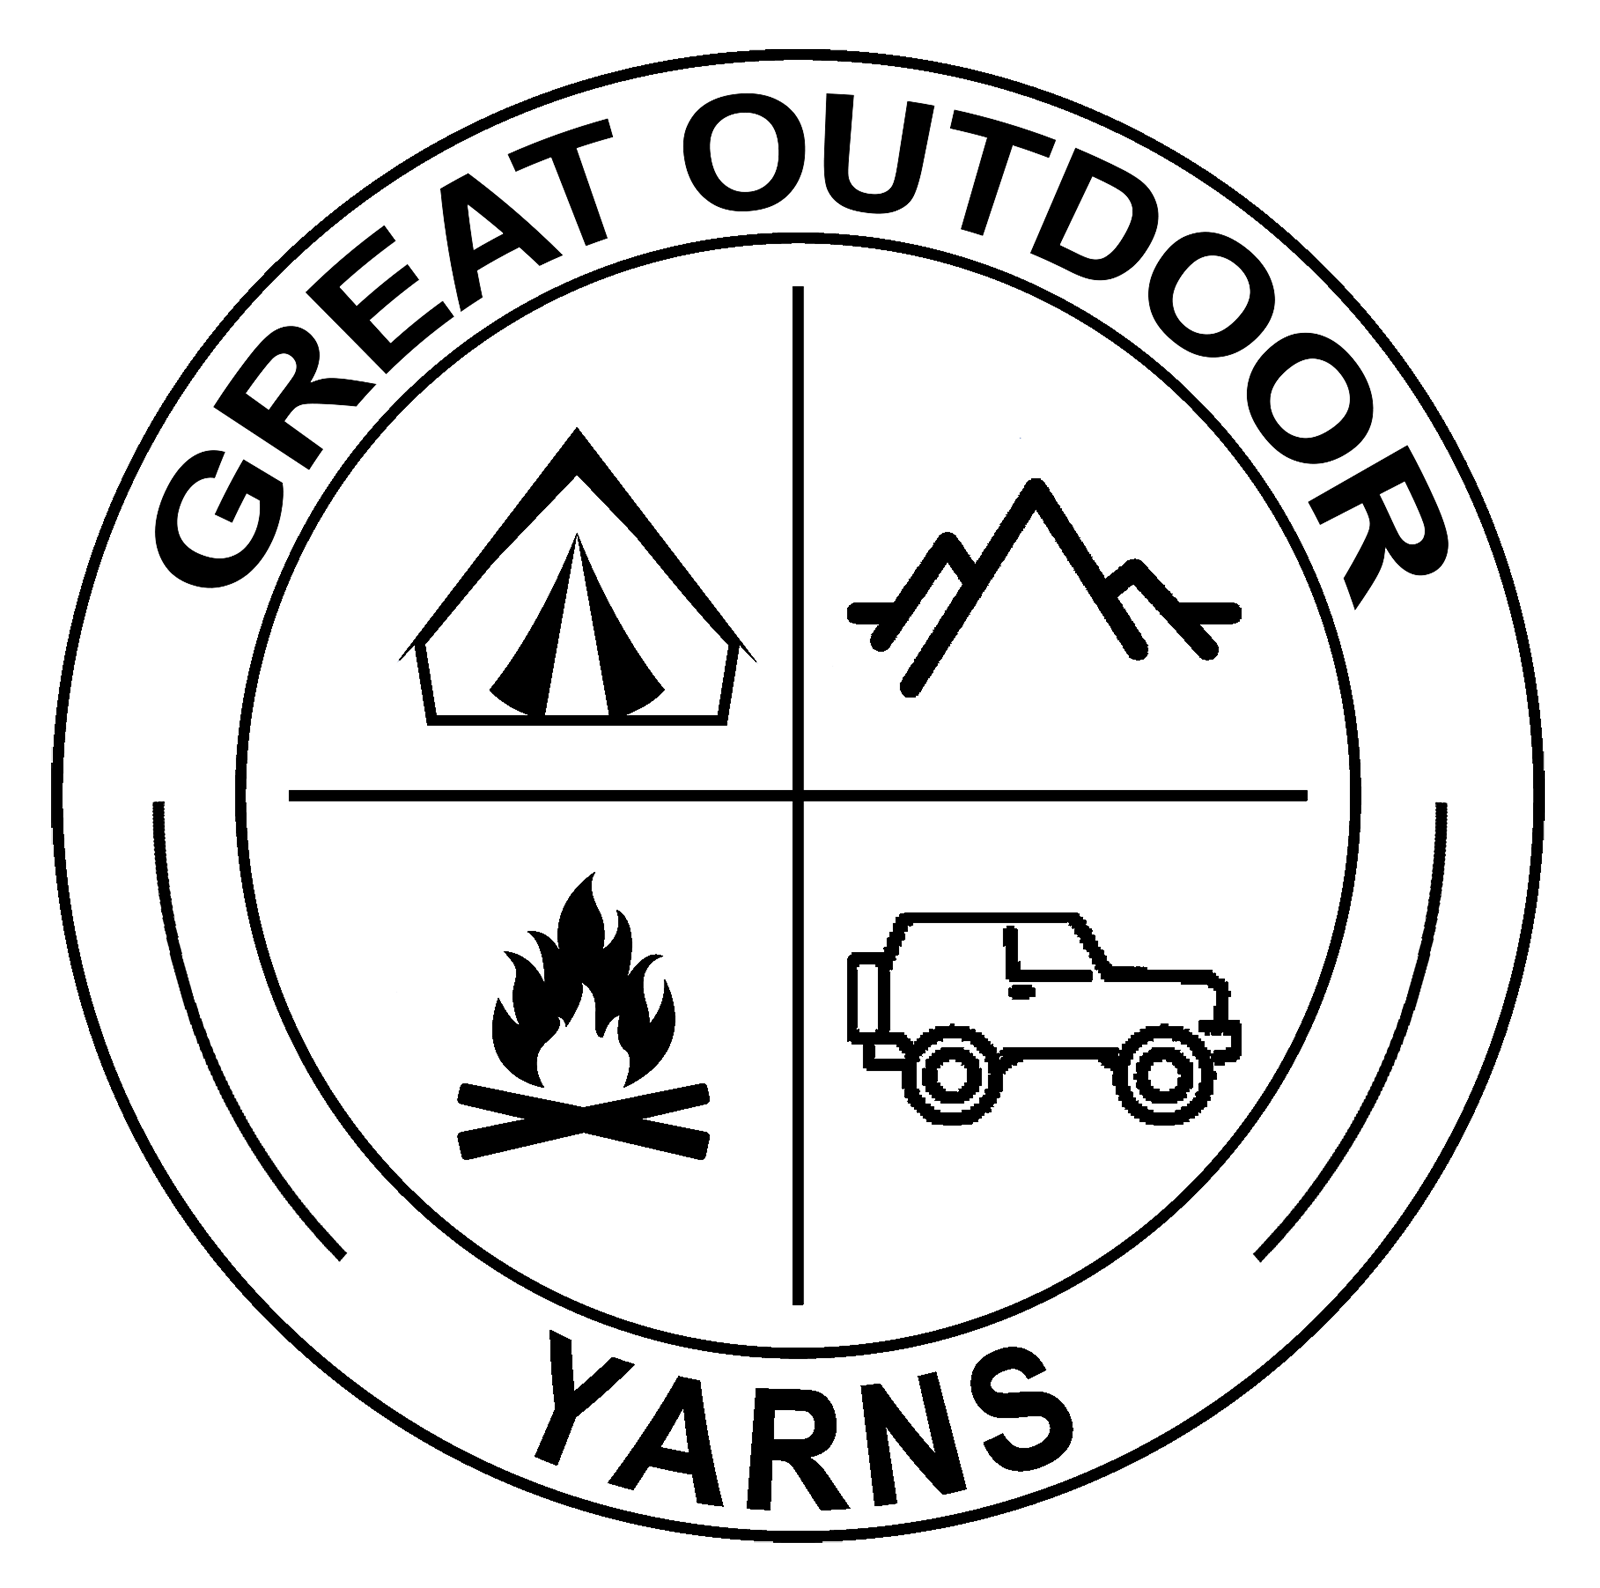 Great Outdoor Yarns